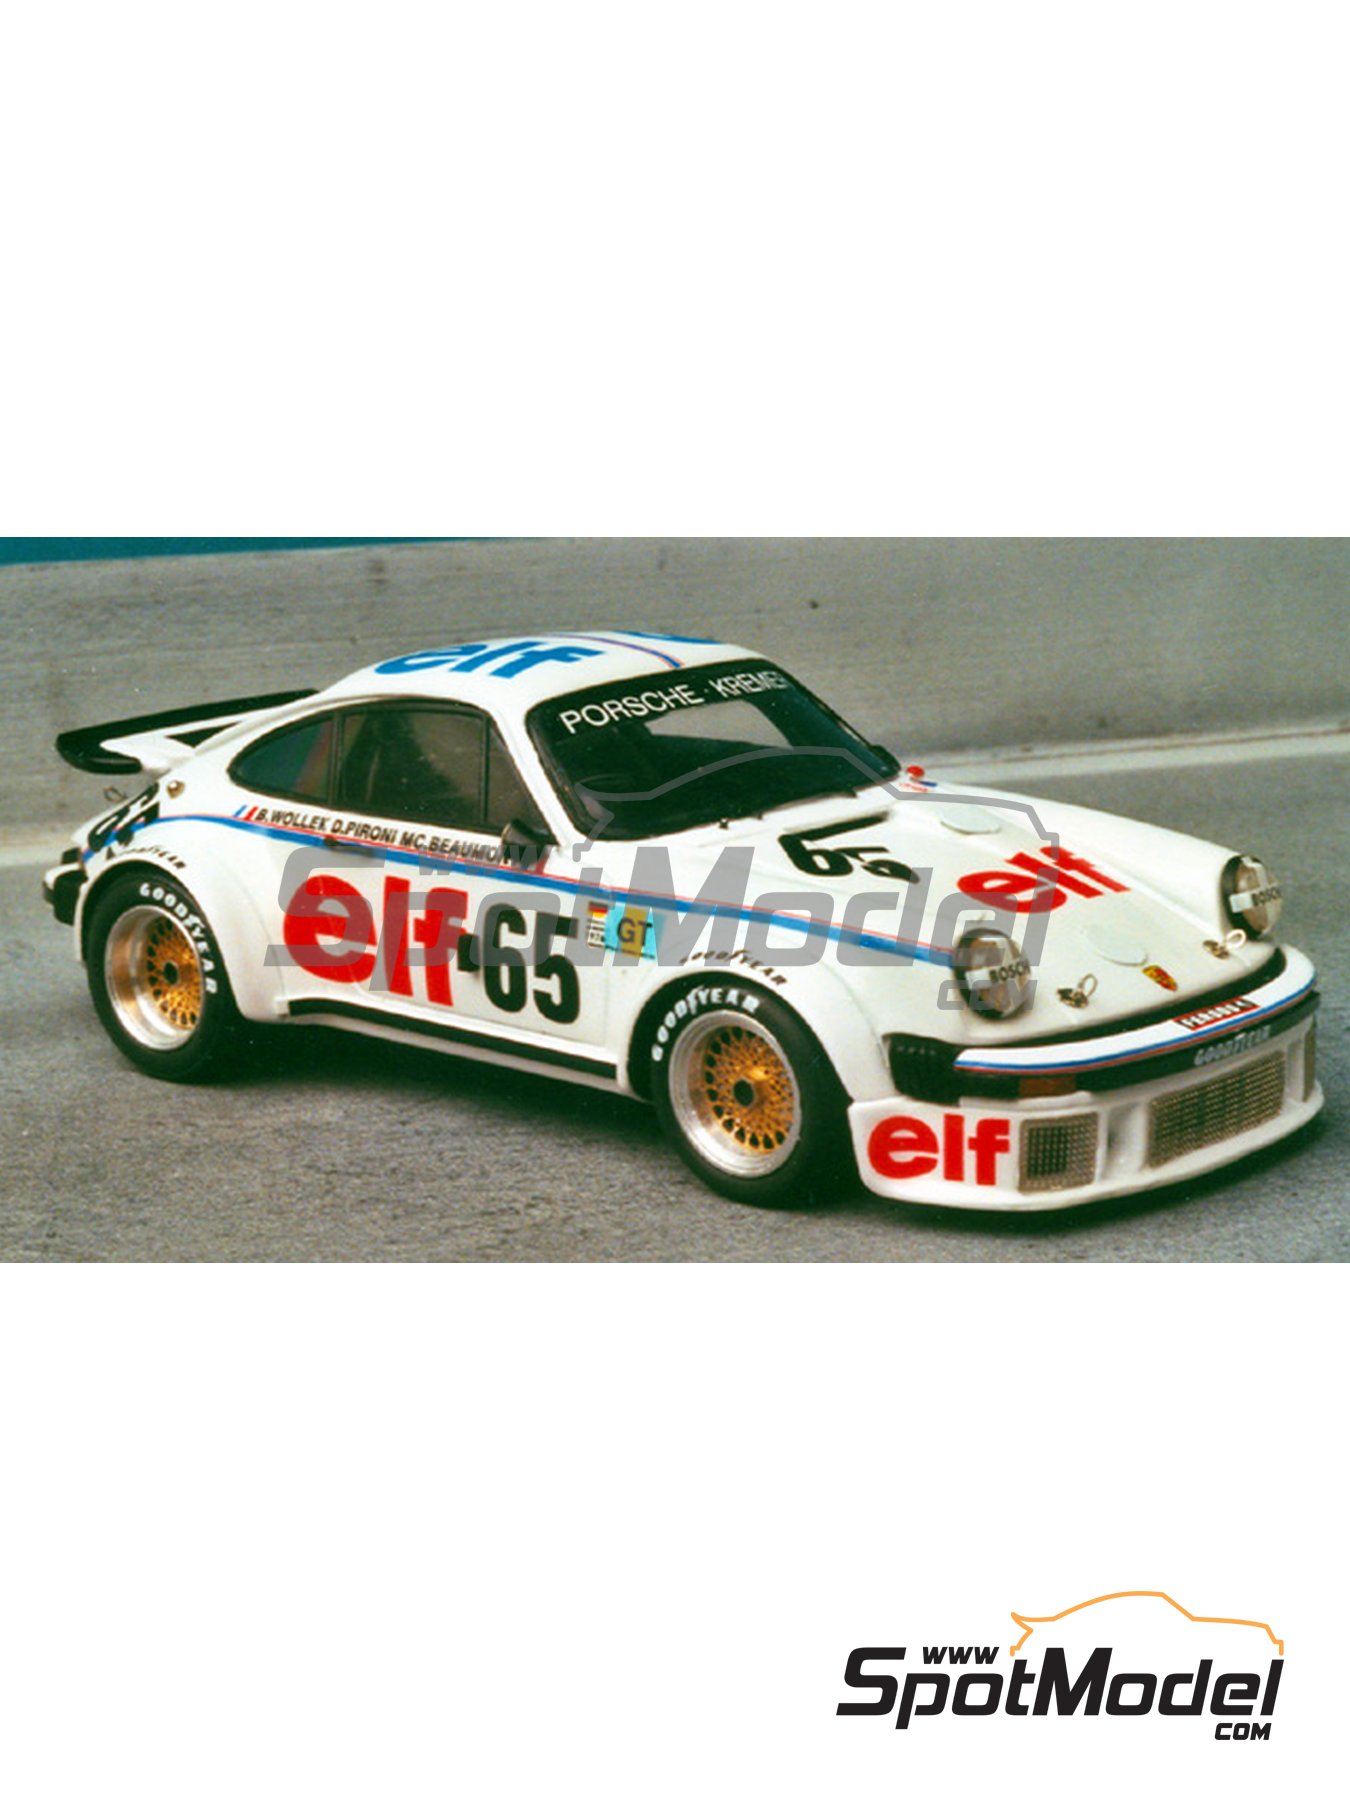 Porsche 934 RSR Turbo #51 Vintage AFX w/ decals SOLD AS BODY ONLY 